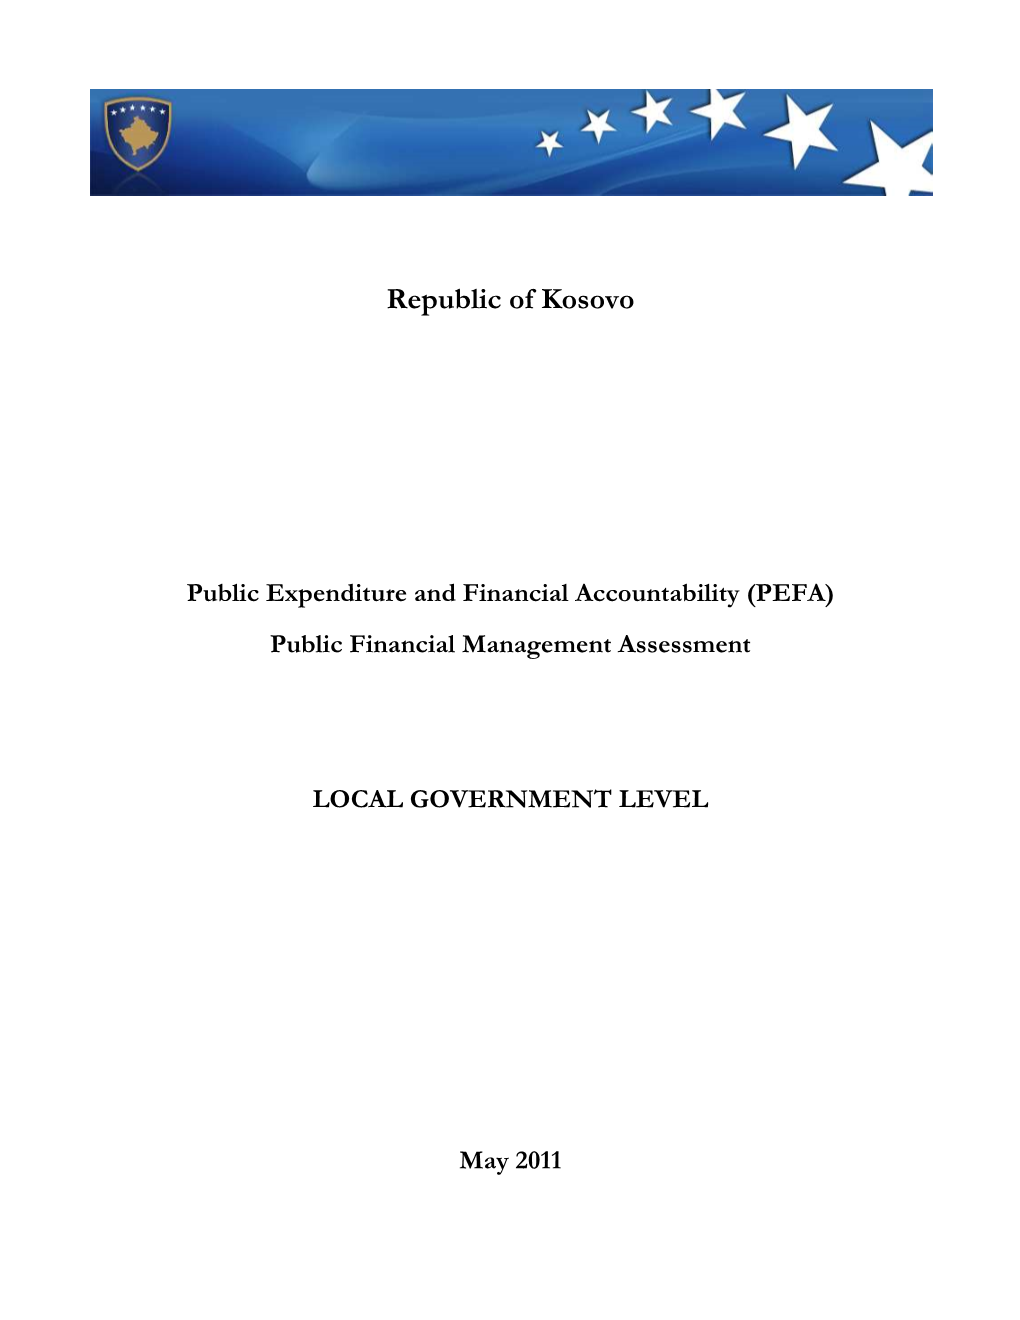 Public Expenditure and Financial Accountability (PEFA) Public Financial Management Assessment